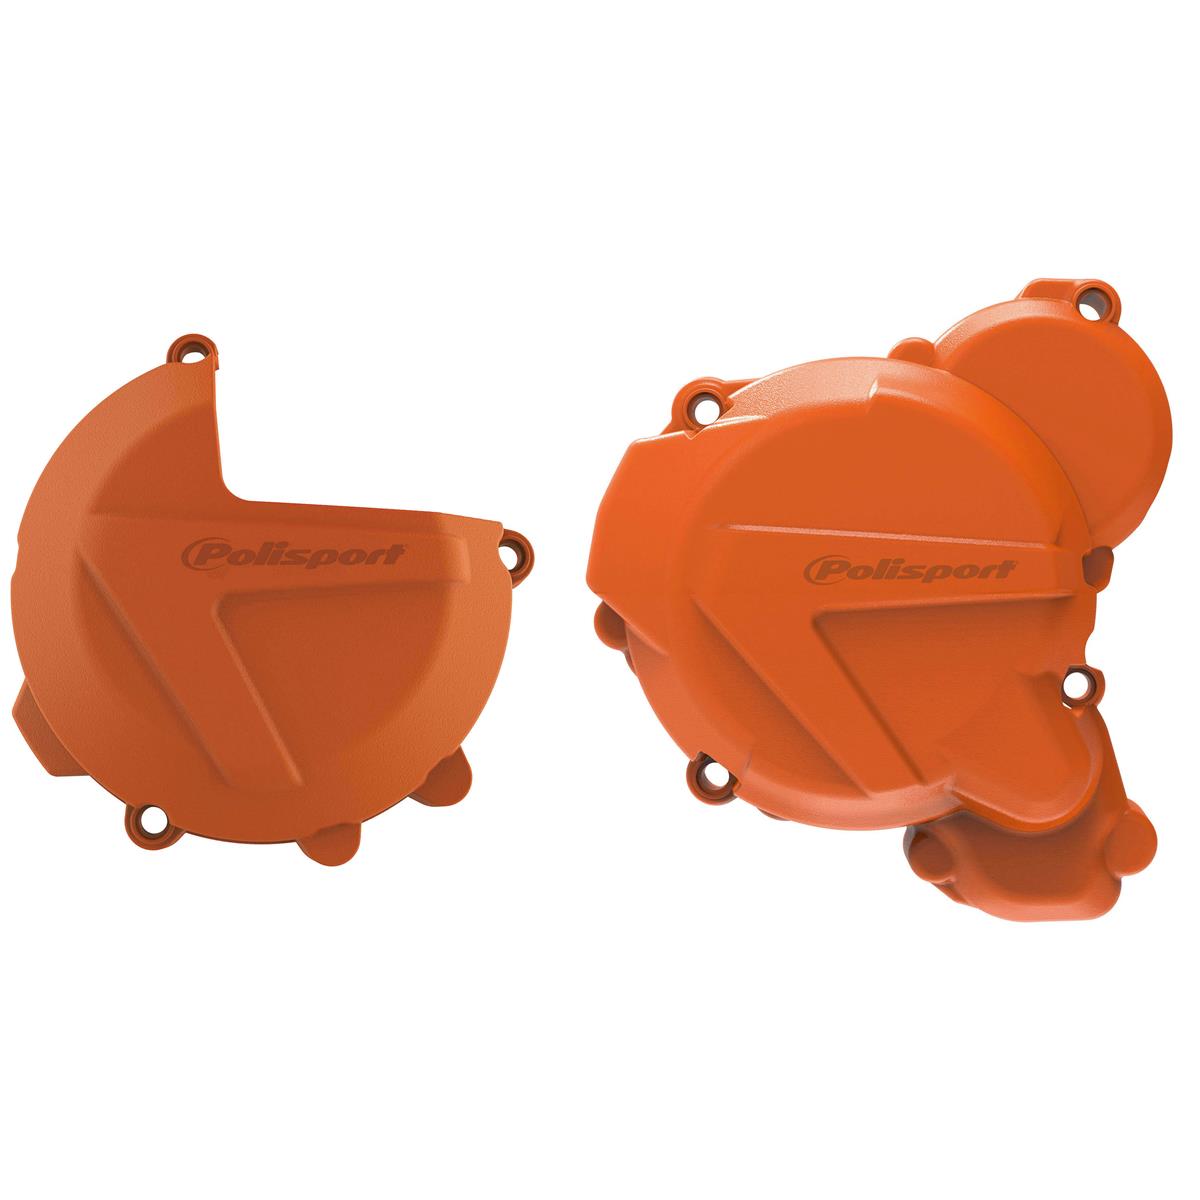 Polisport Clutch/Ignition Cover Protection  KTM EXC 250/300 17-20, Orange